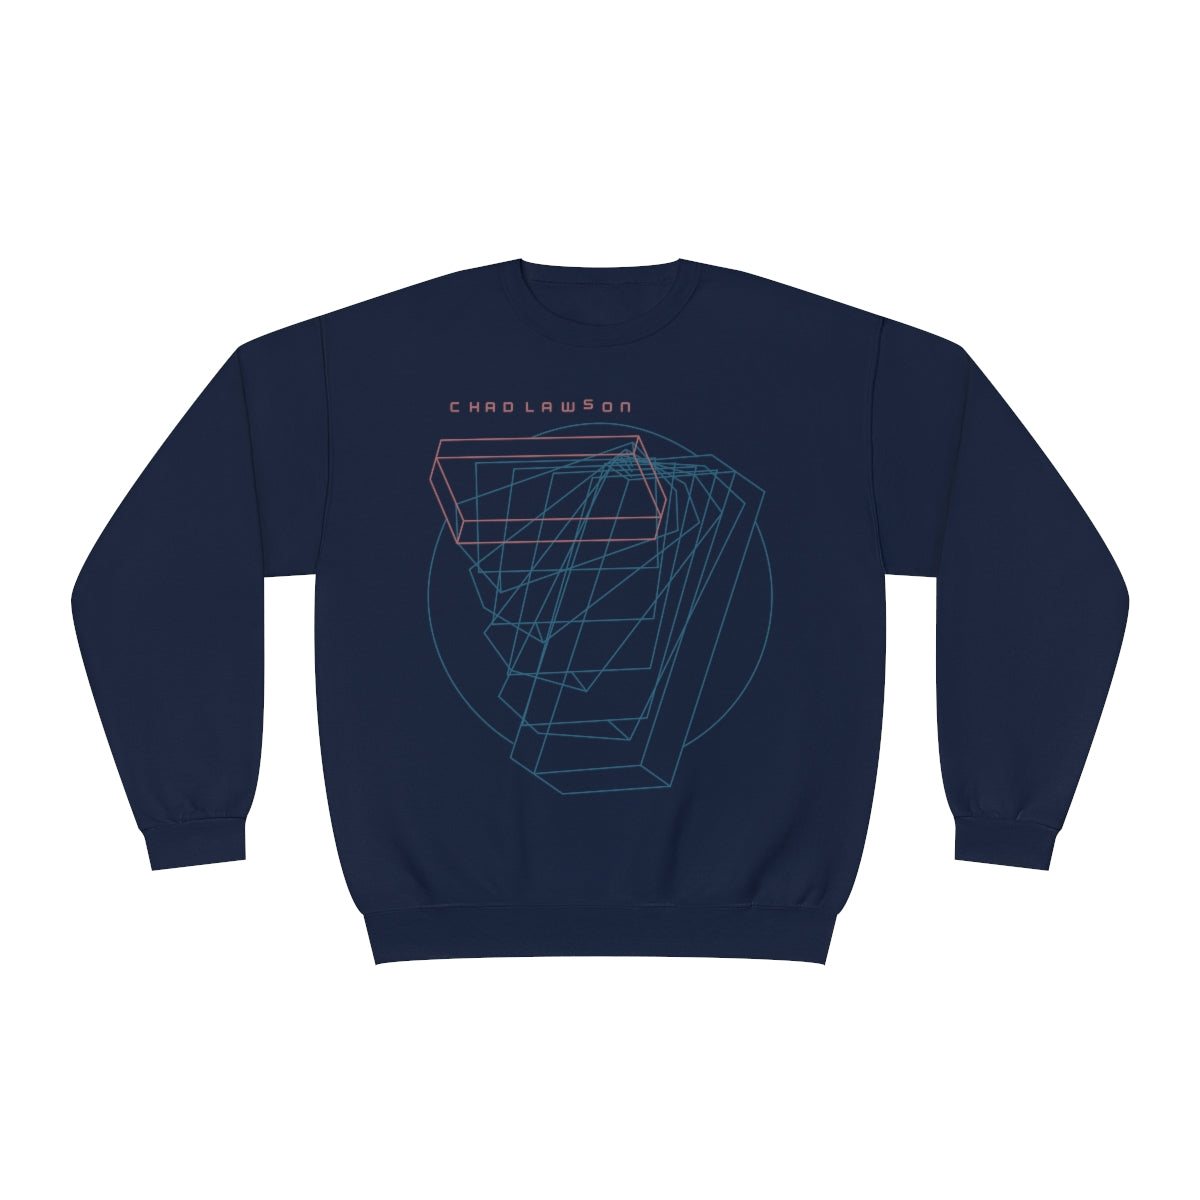 Table Limited Edition - Crewneck Sweatshirt - Navy